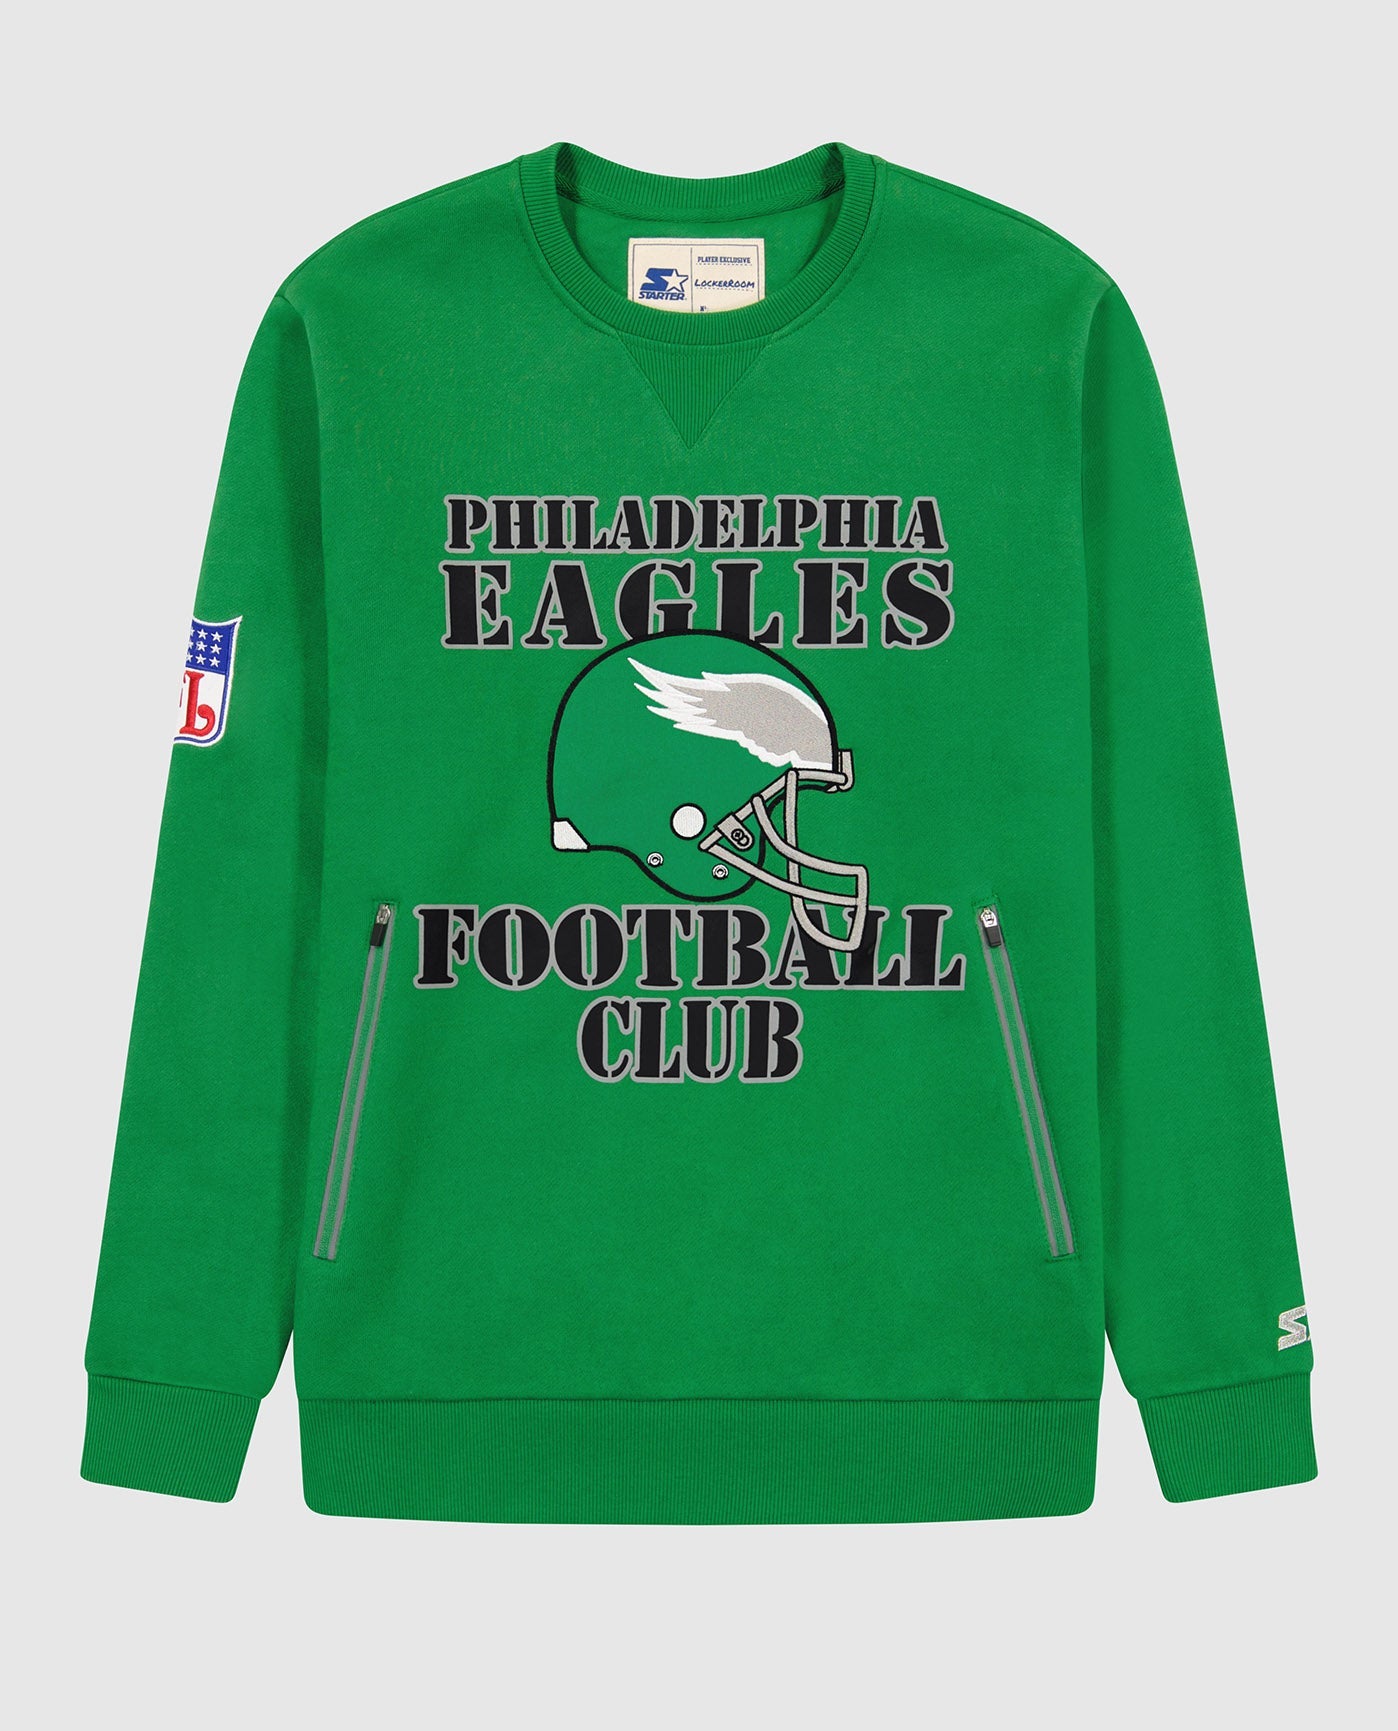 mitchell and ness philadelphia eagles sweatshirt